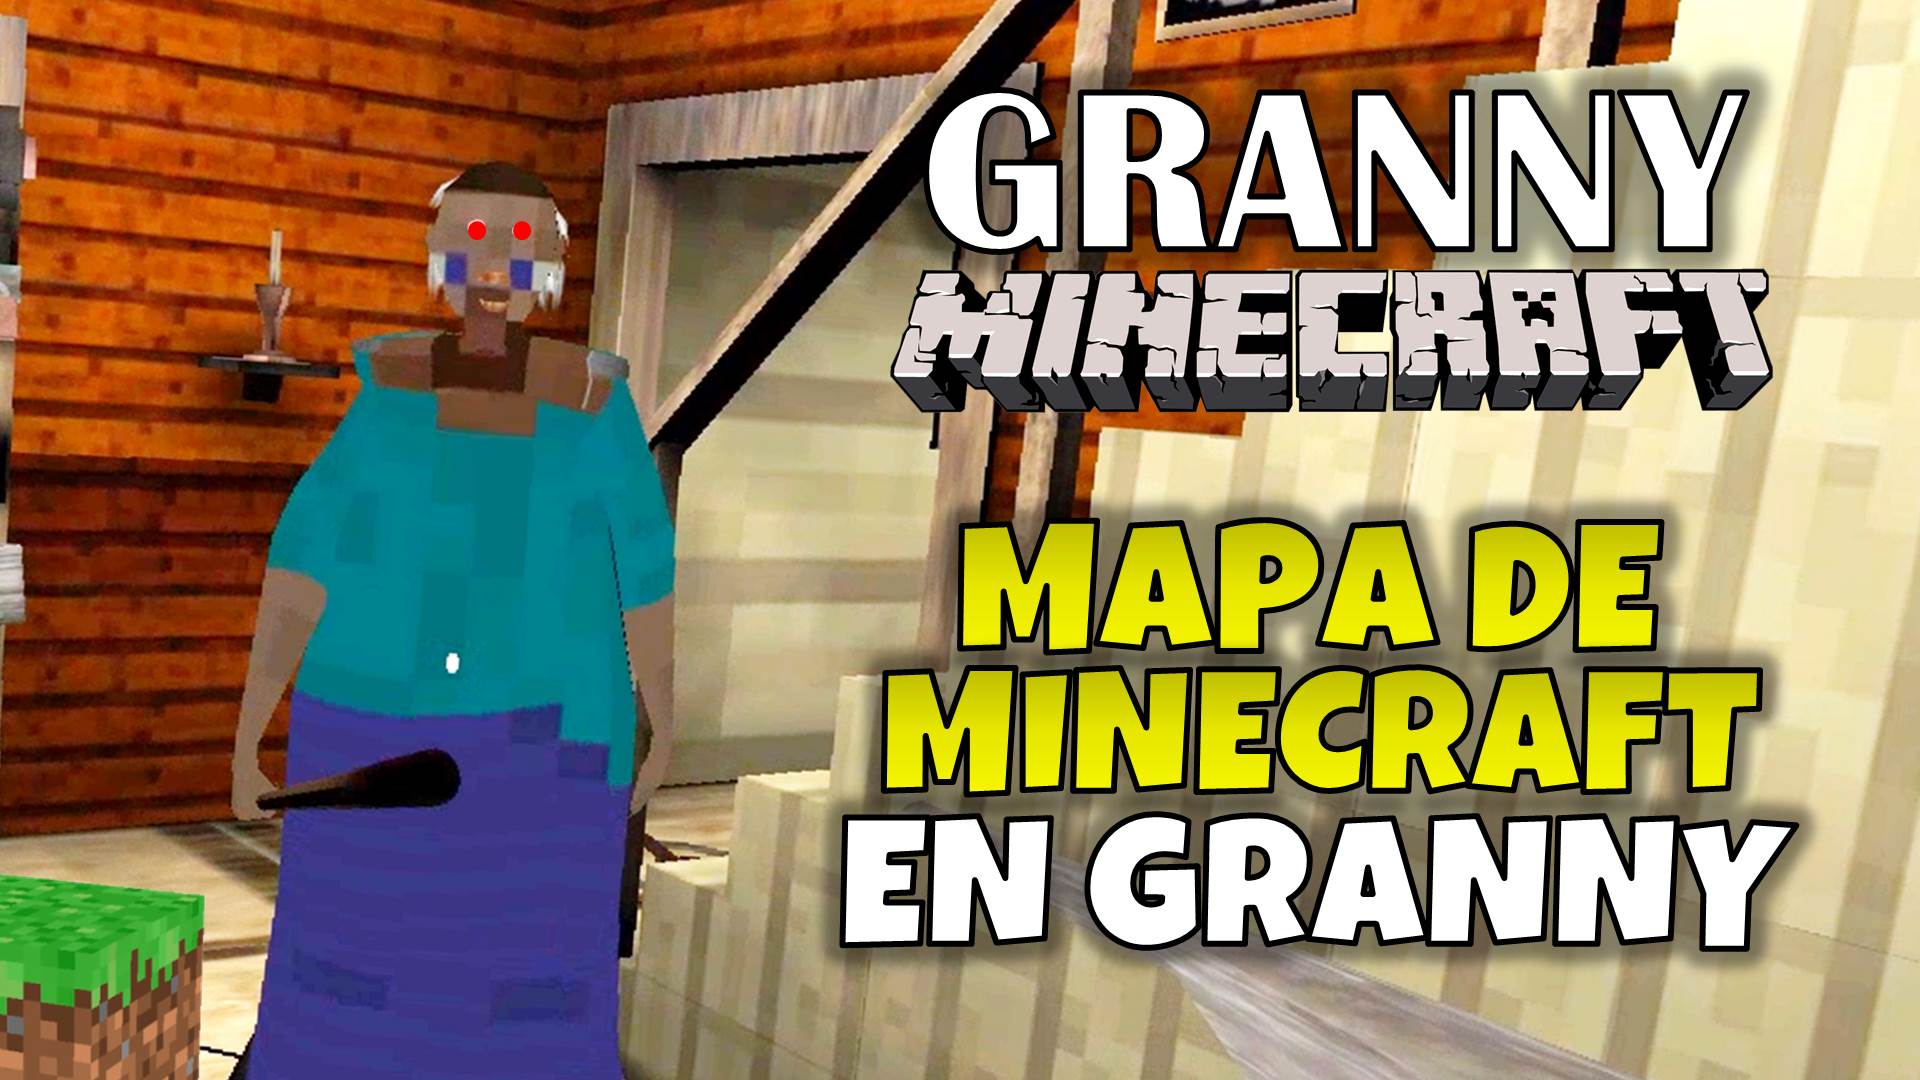 minecraft and granny